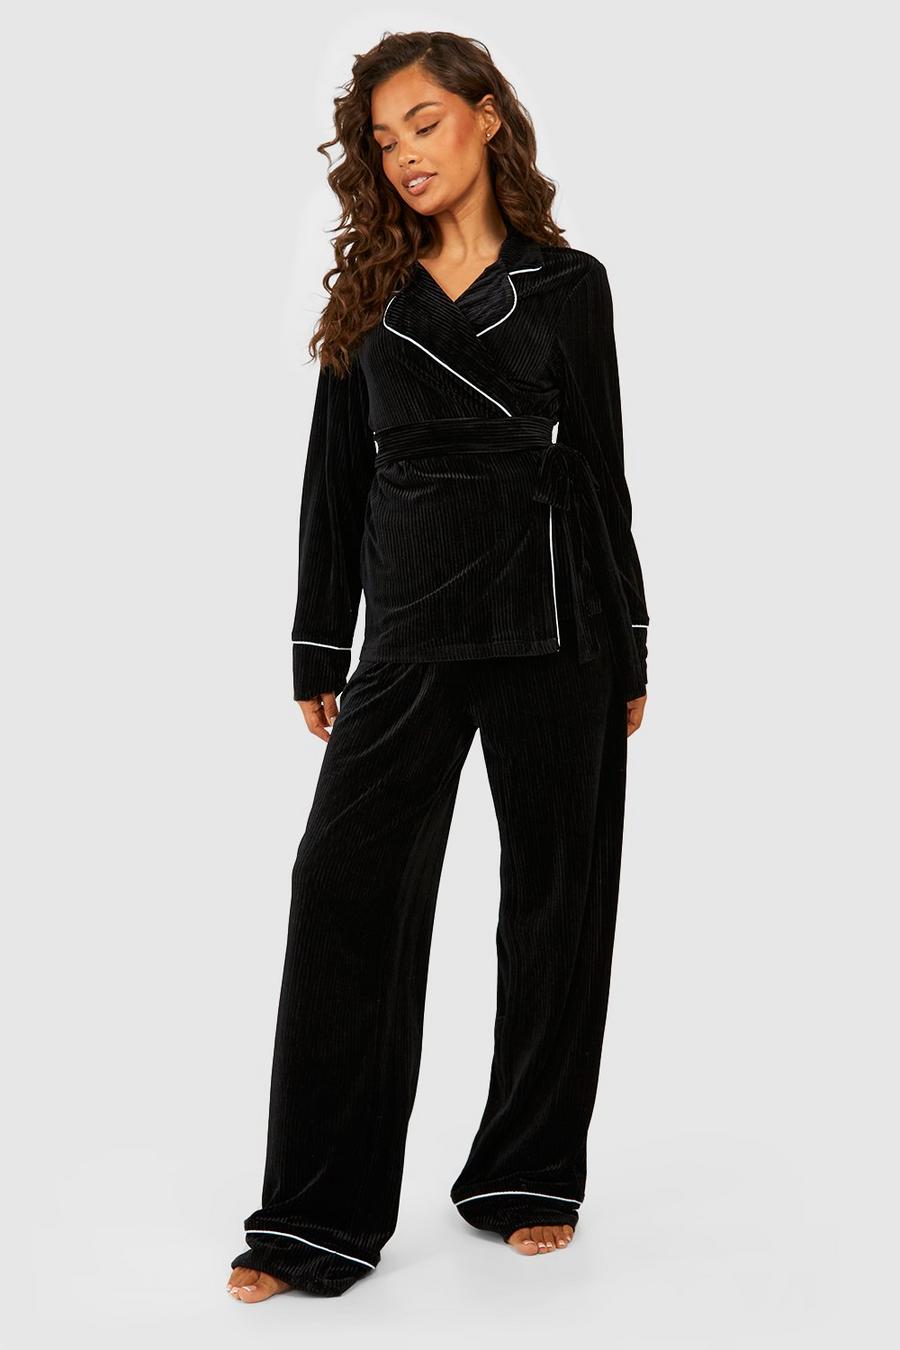 Black schwarz Premium Velvet Wrap Top Pyjama Set